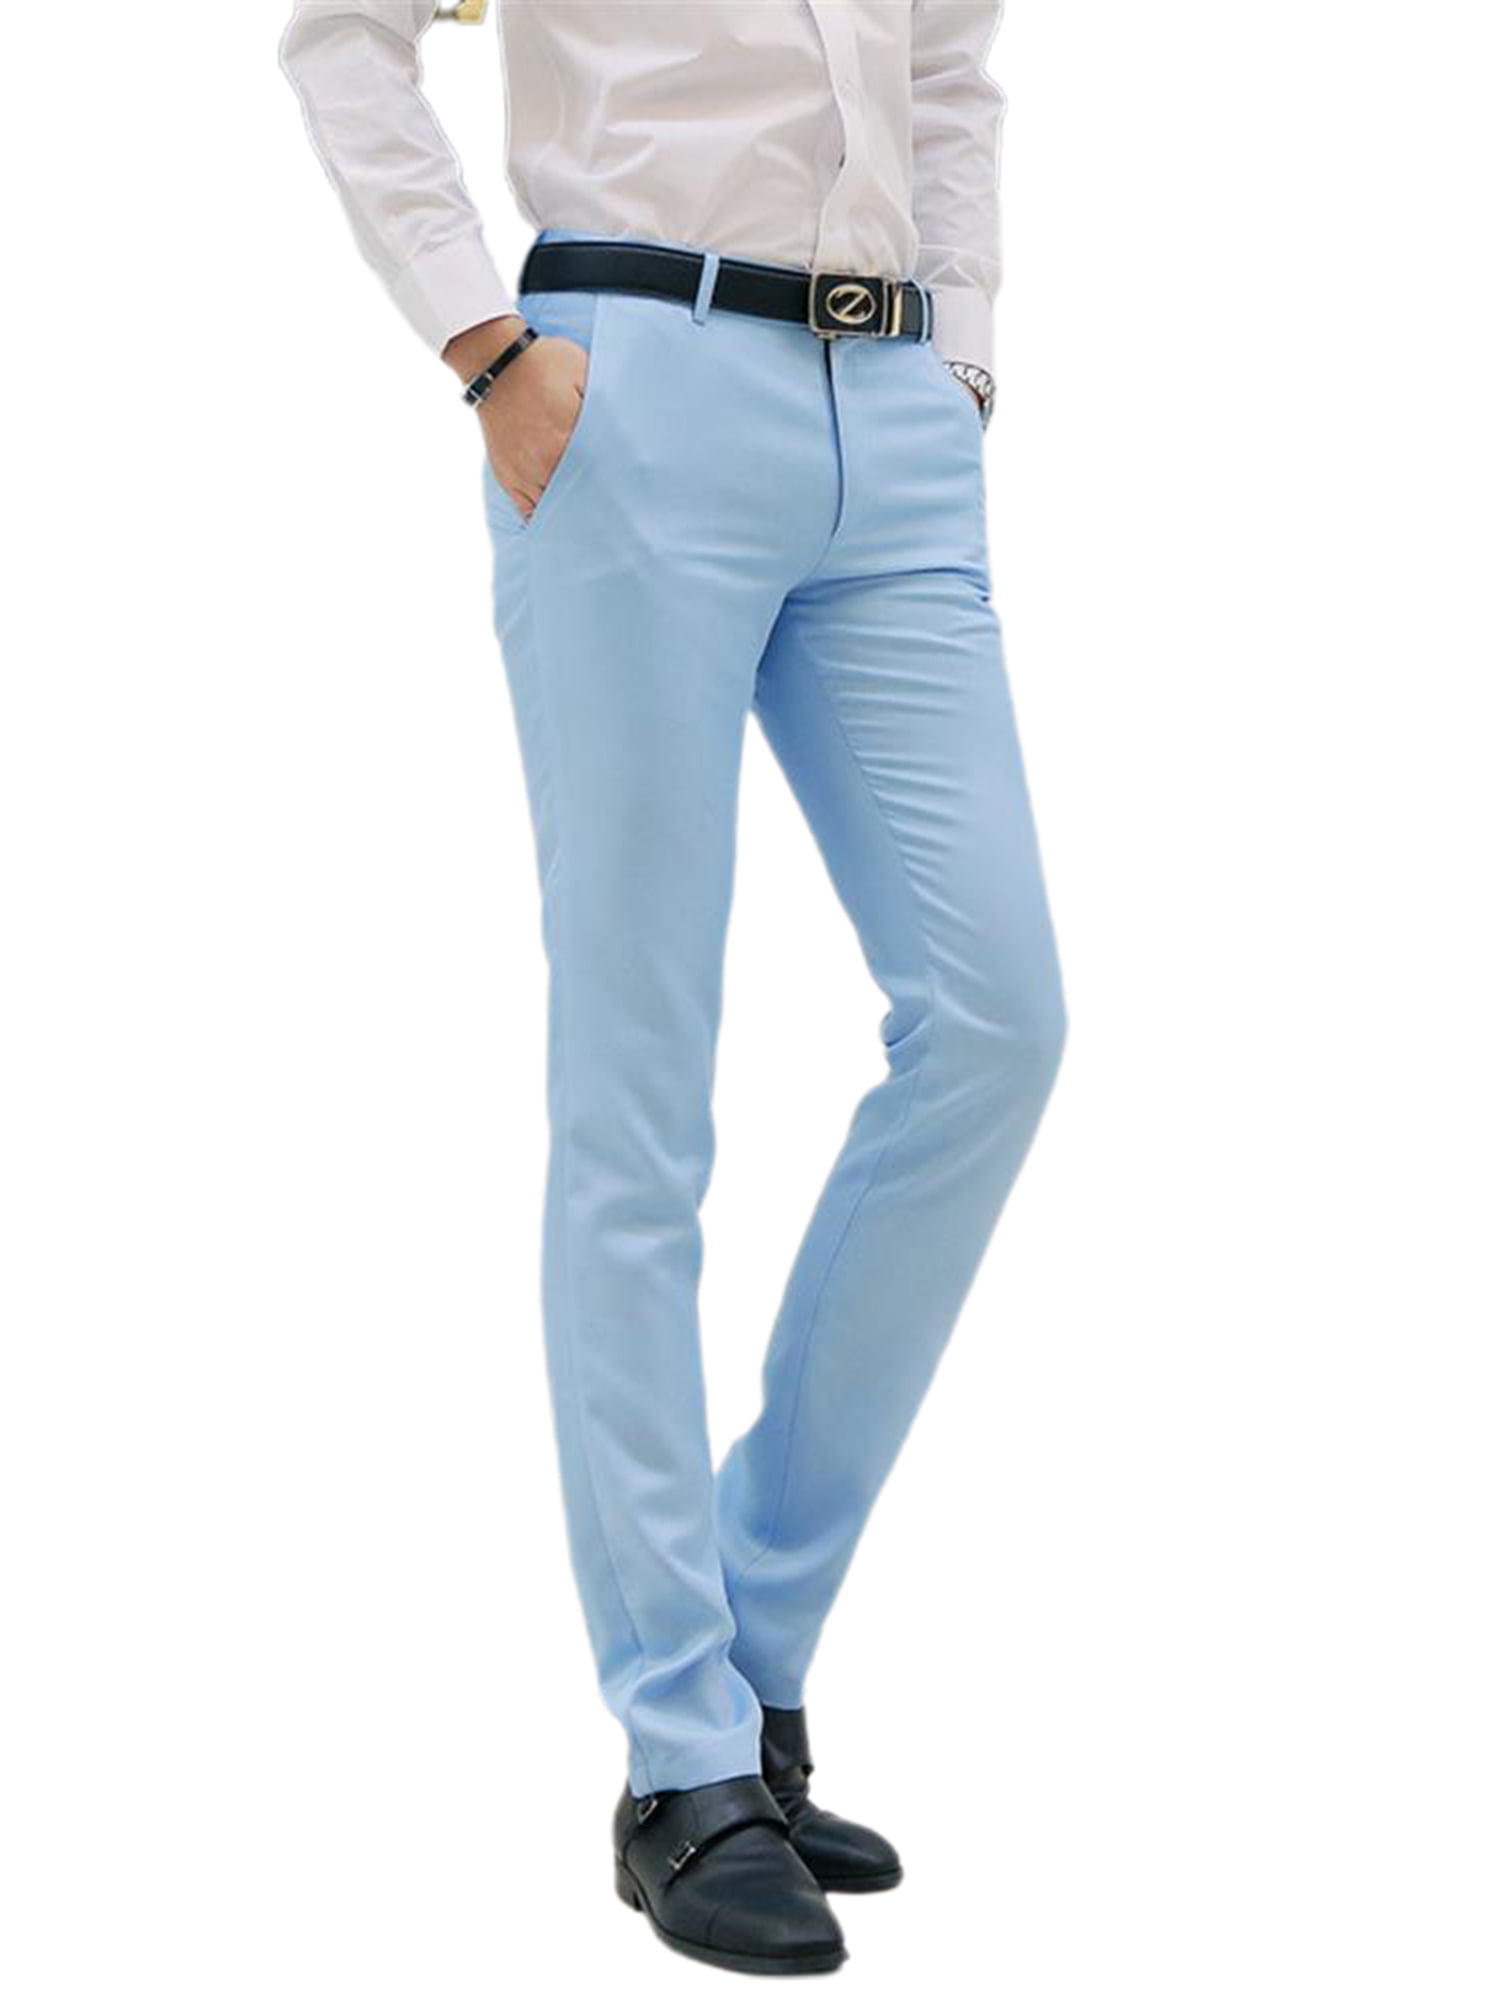 Formal Trouser: Check Men Blue Cotton Blend Formal Trouser at Cliths-atpcosmetics.com.vn